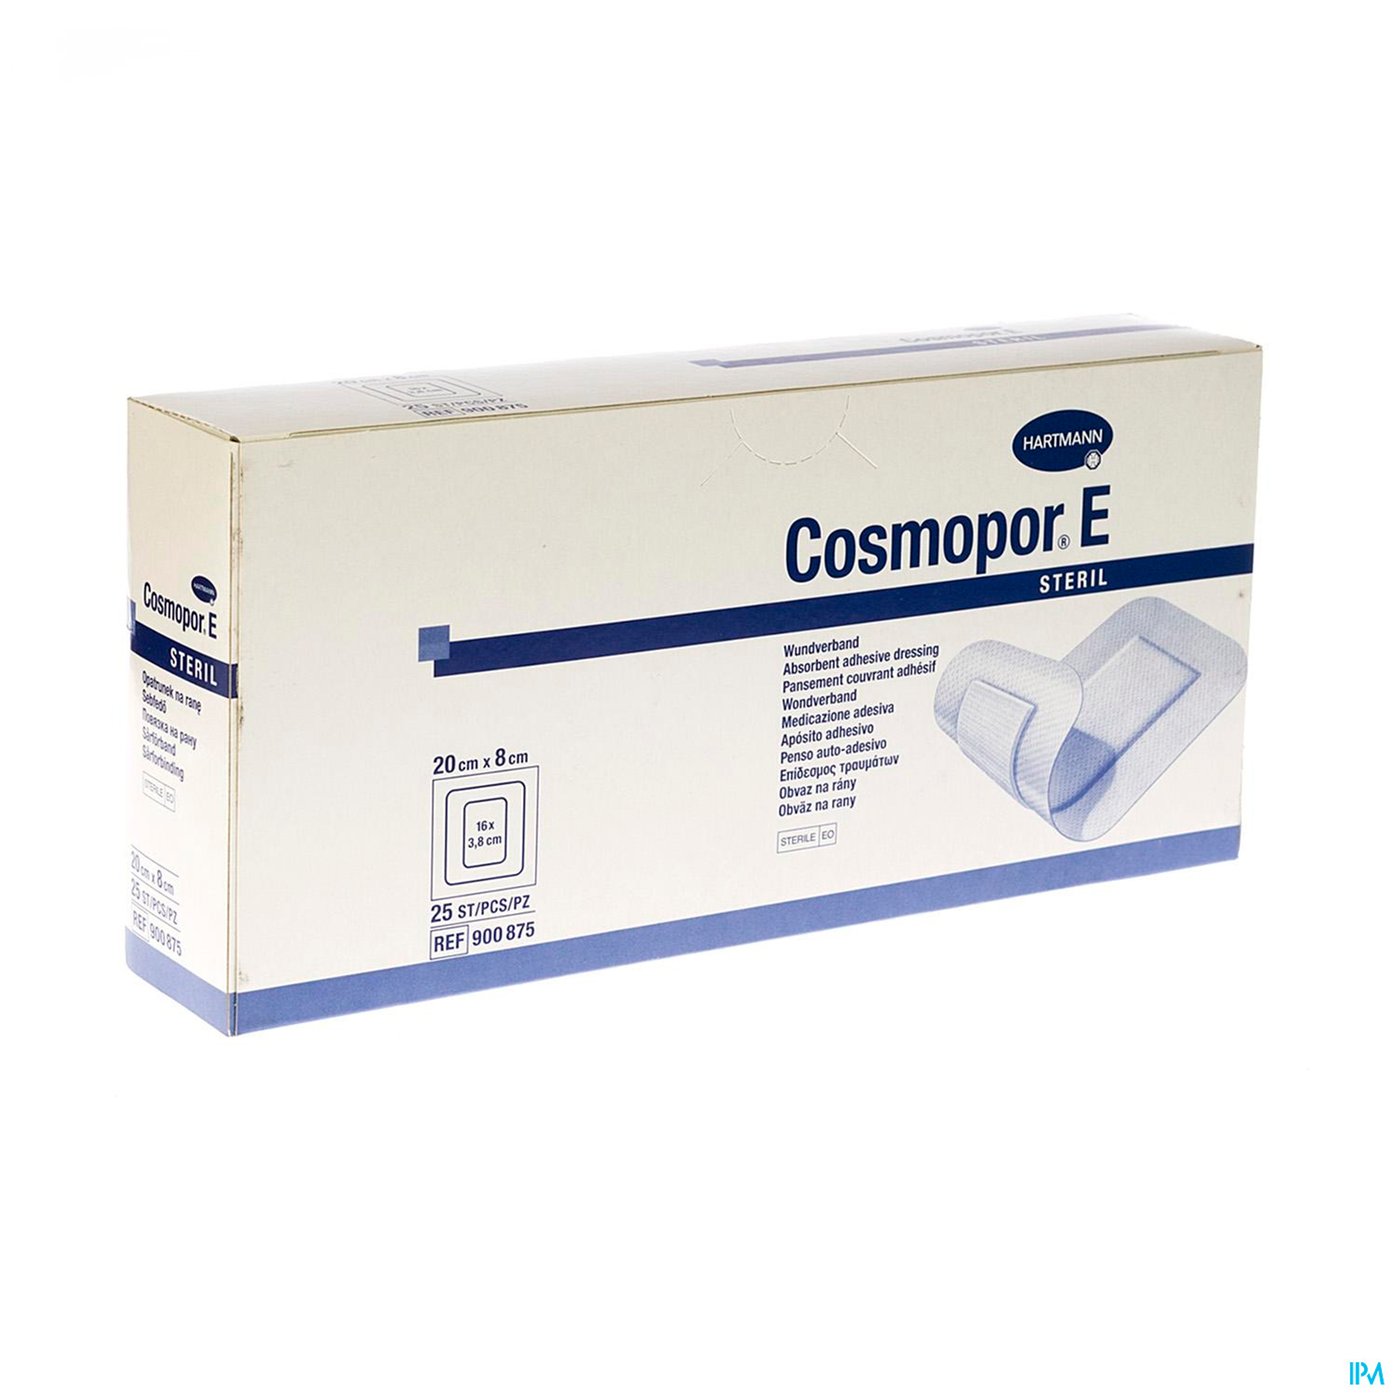 Cosmopor E Latexfree 20x8cm 25 P/s packshot